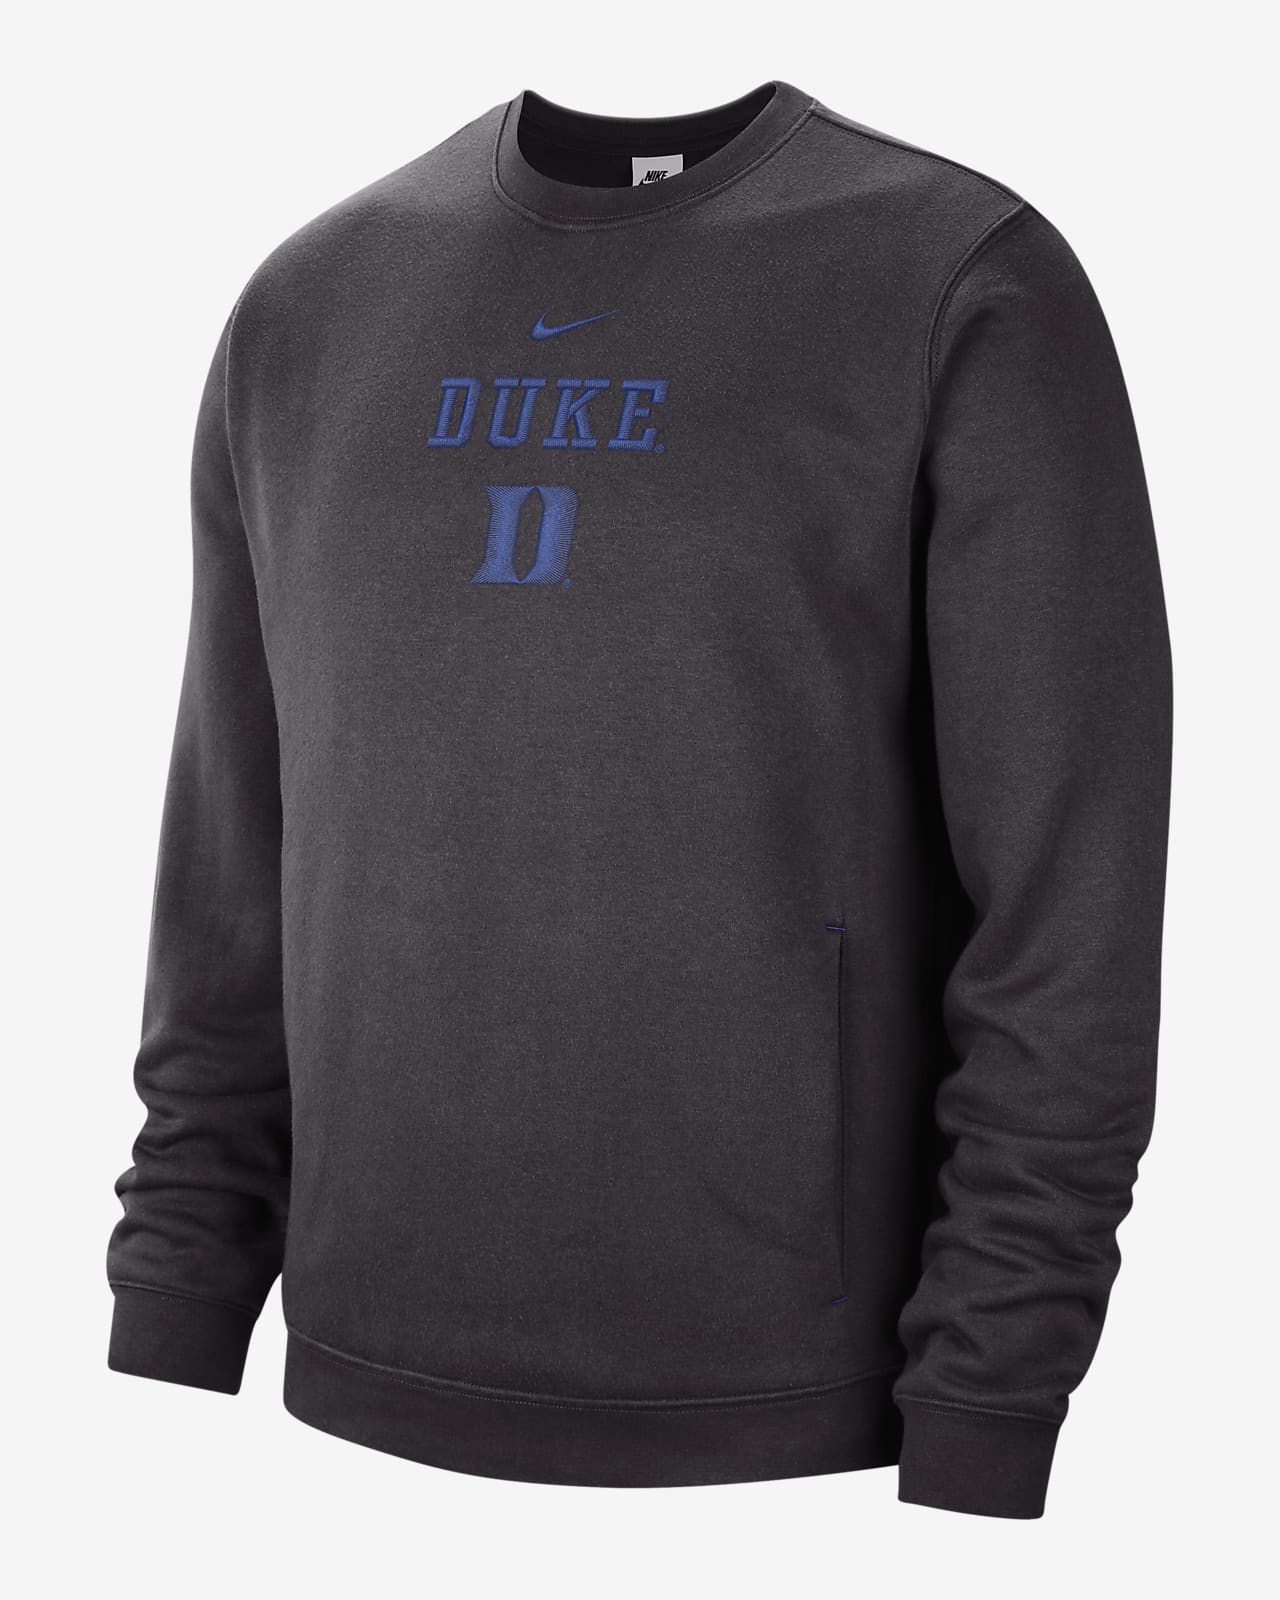 Sudadera para Nike College Club (Duke).